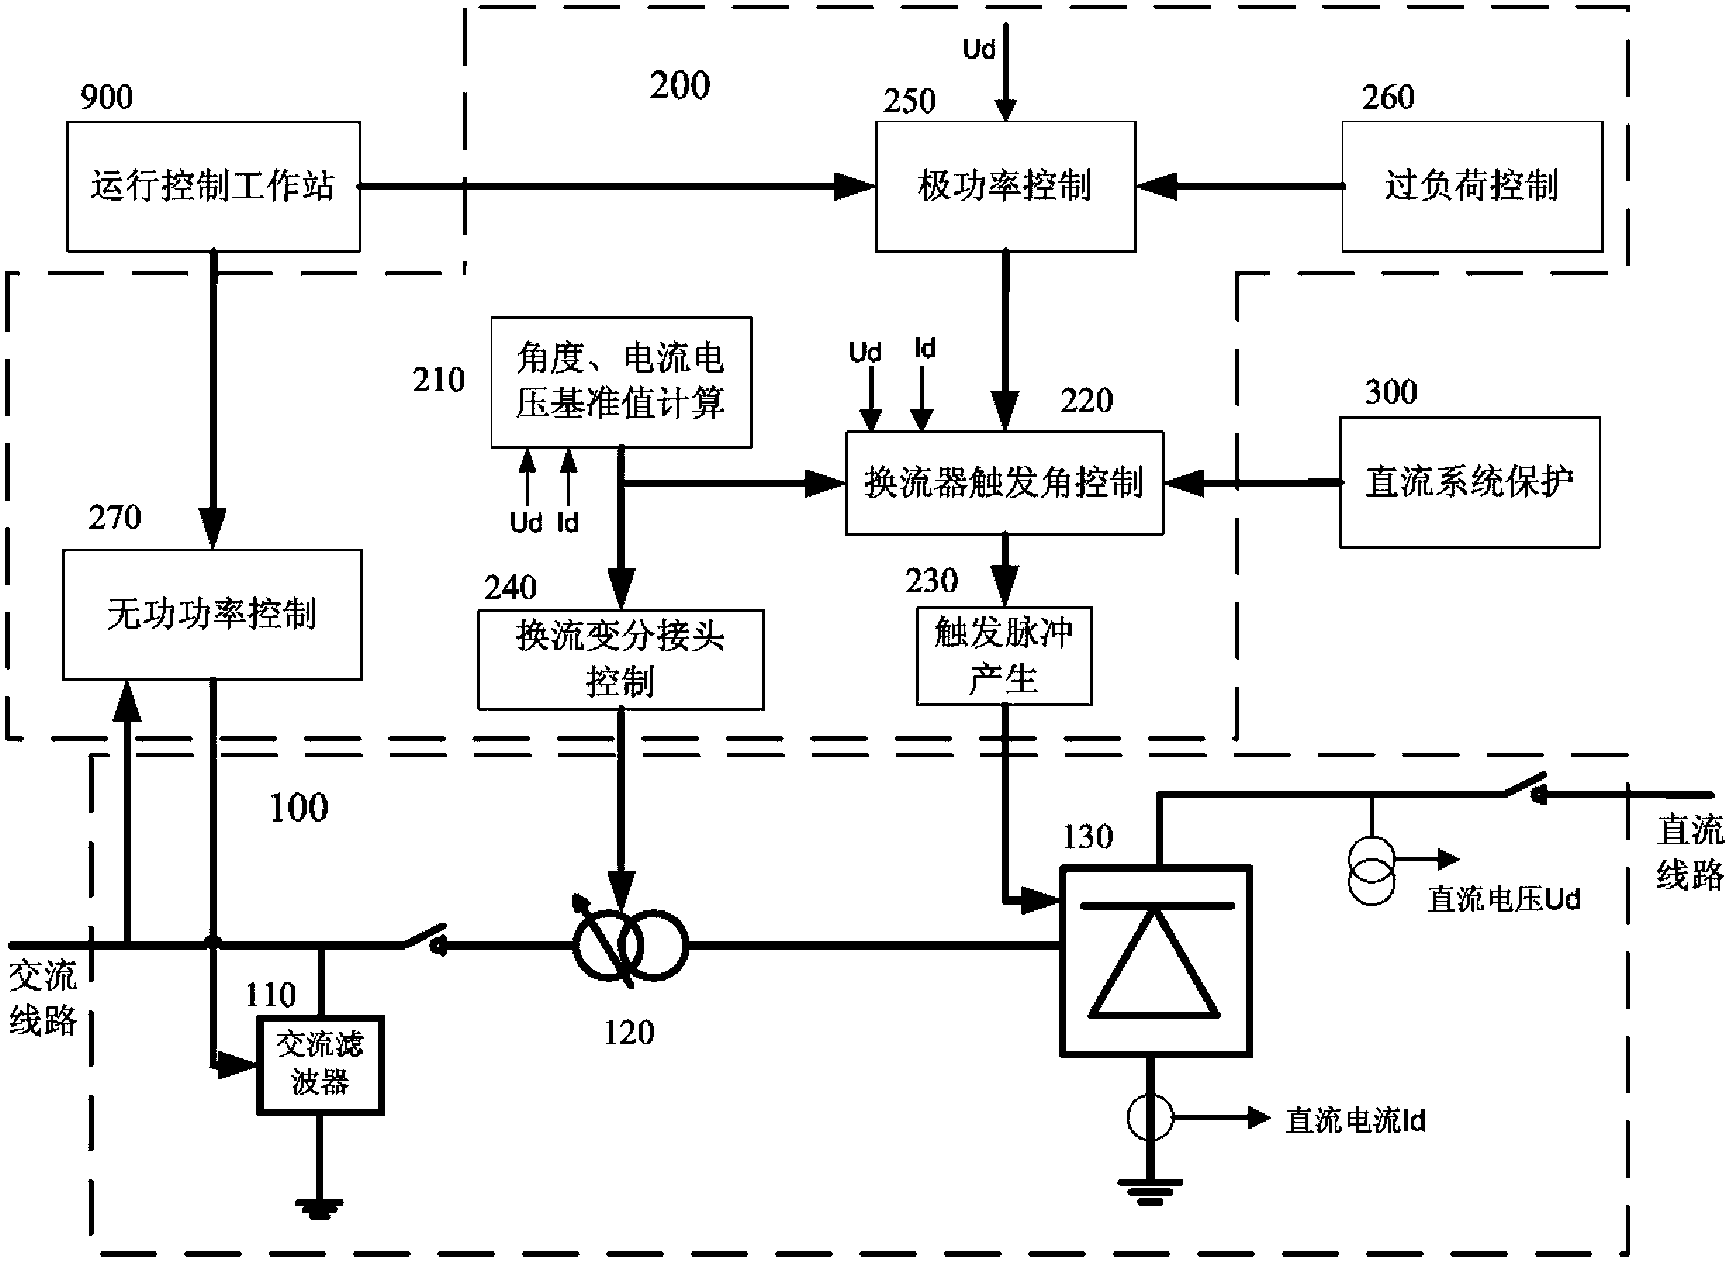 Pole power control simulation device